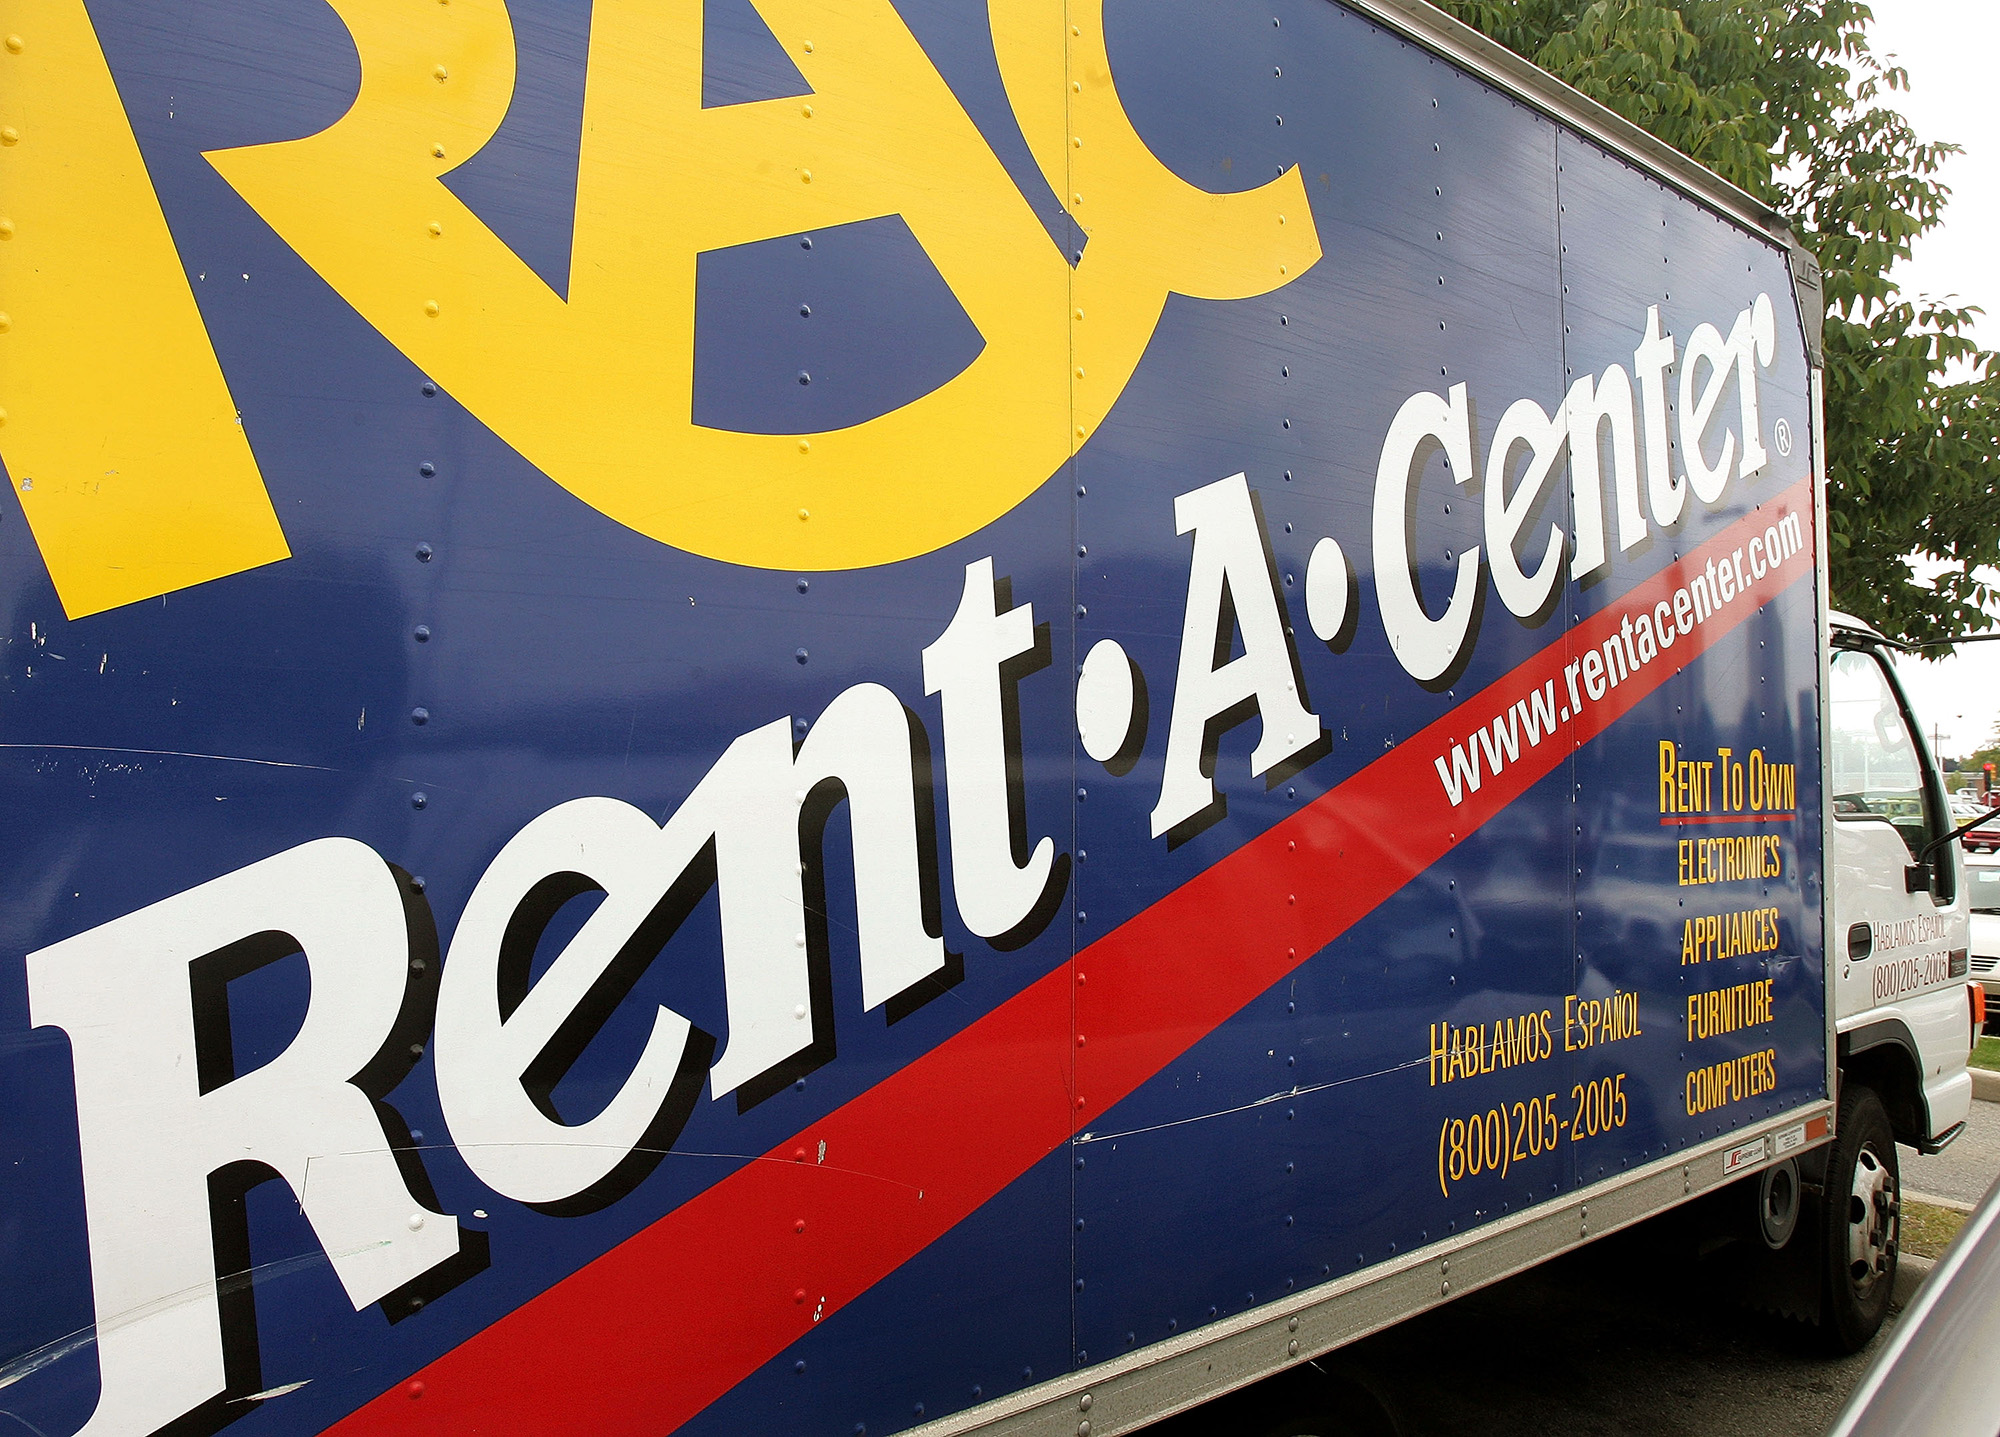 Rent-A-Center has Computers, Furniture, Electronics, Appliances